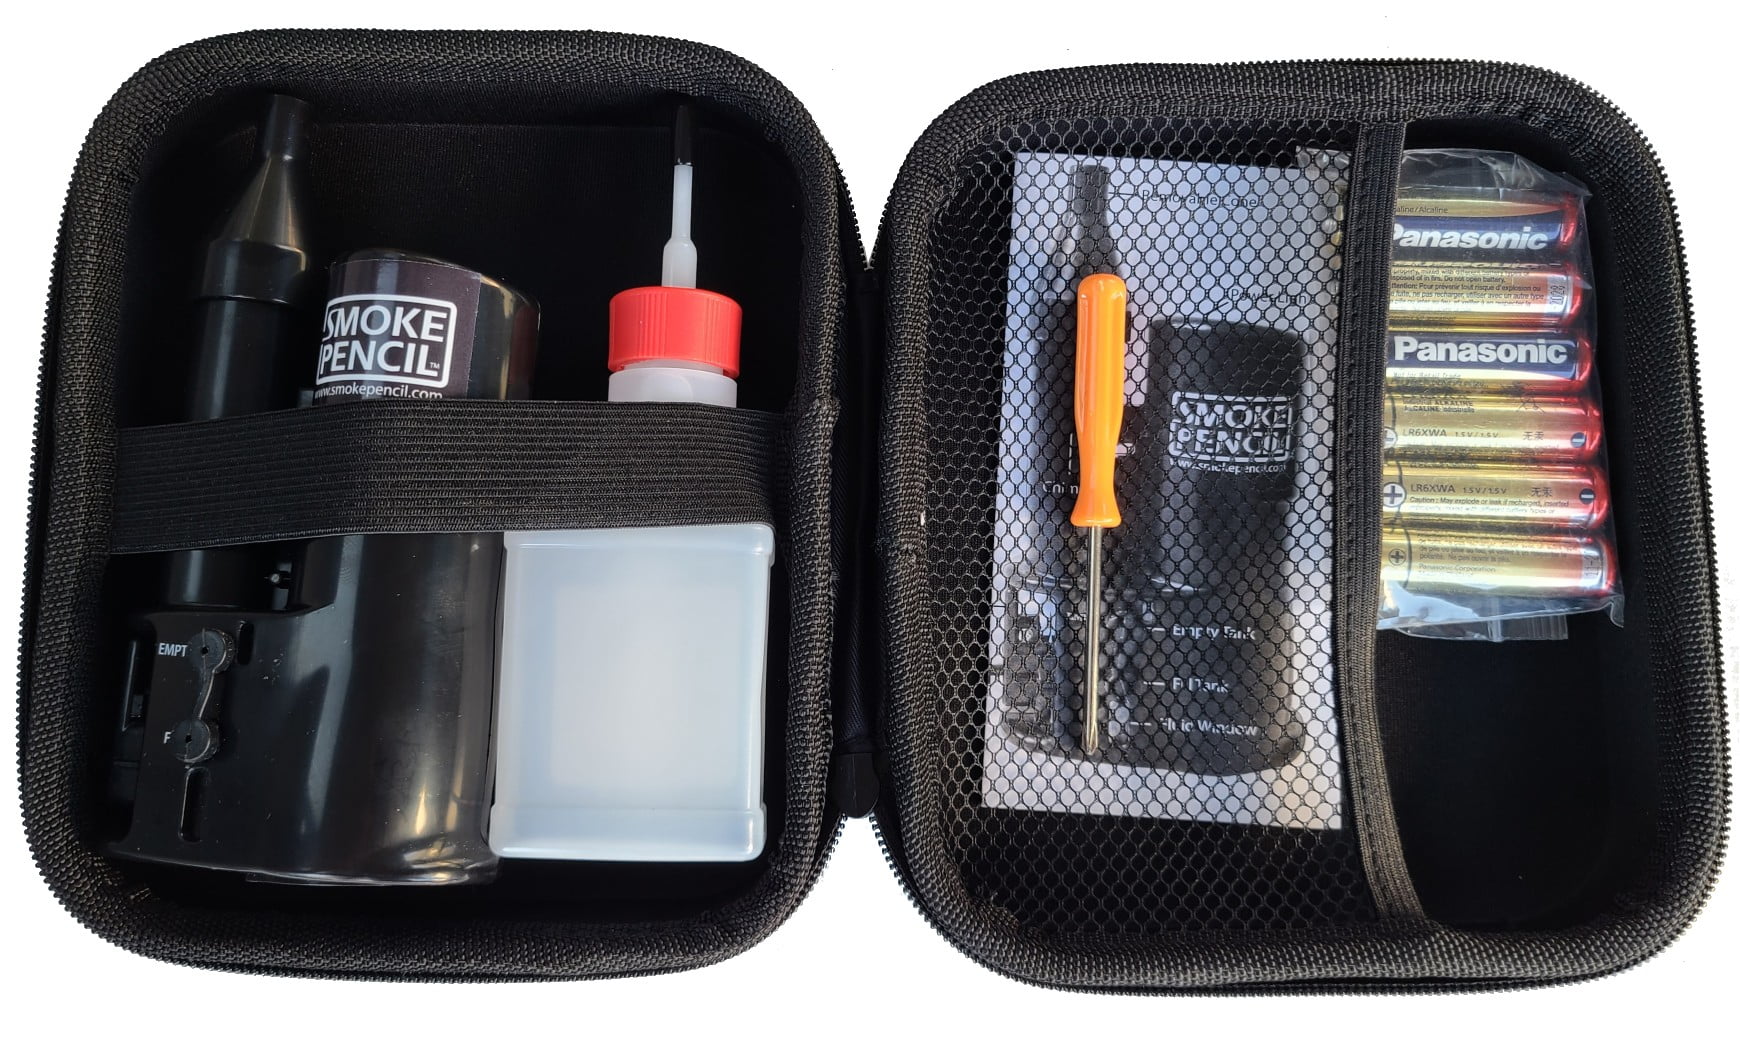 Smoke Pencil ONE Air Leak Detector Tool Kit, Handheld Smoke Draft Detector  with 3 oz Non-Toxic Fog Juice 